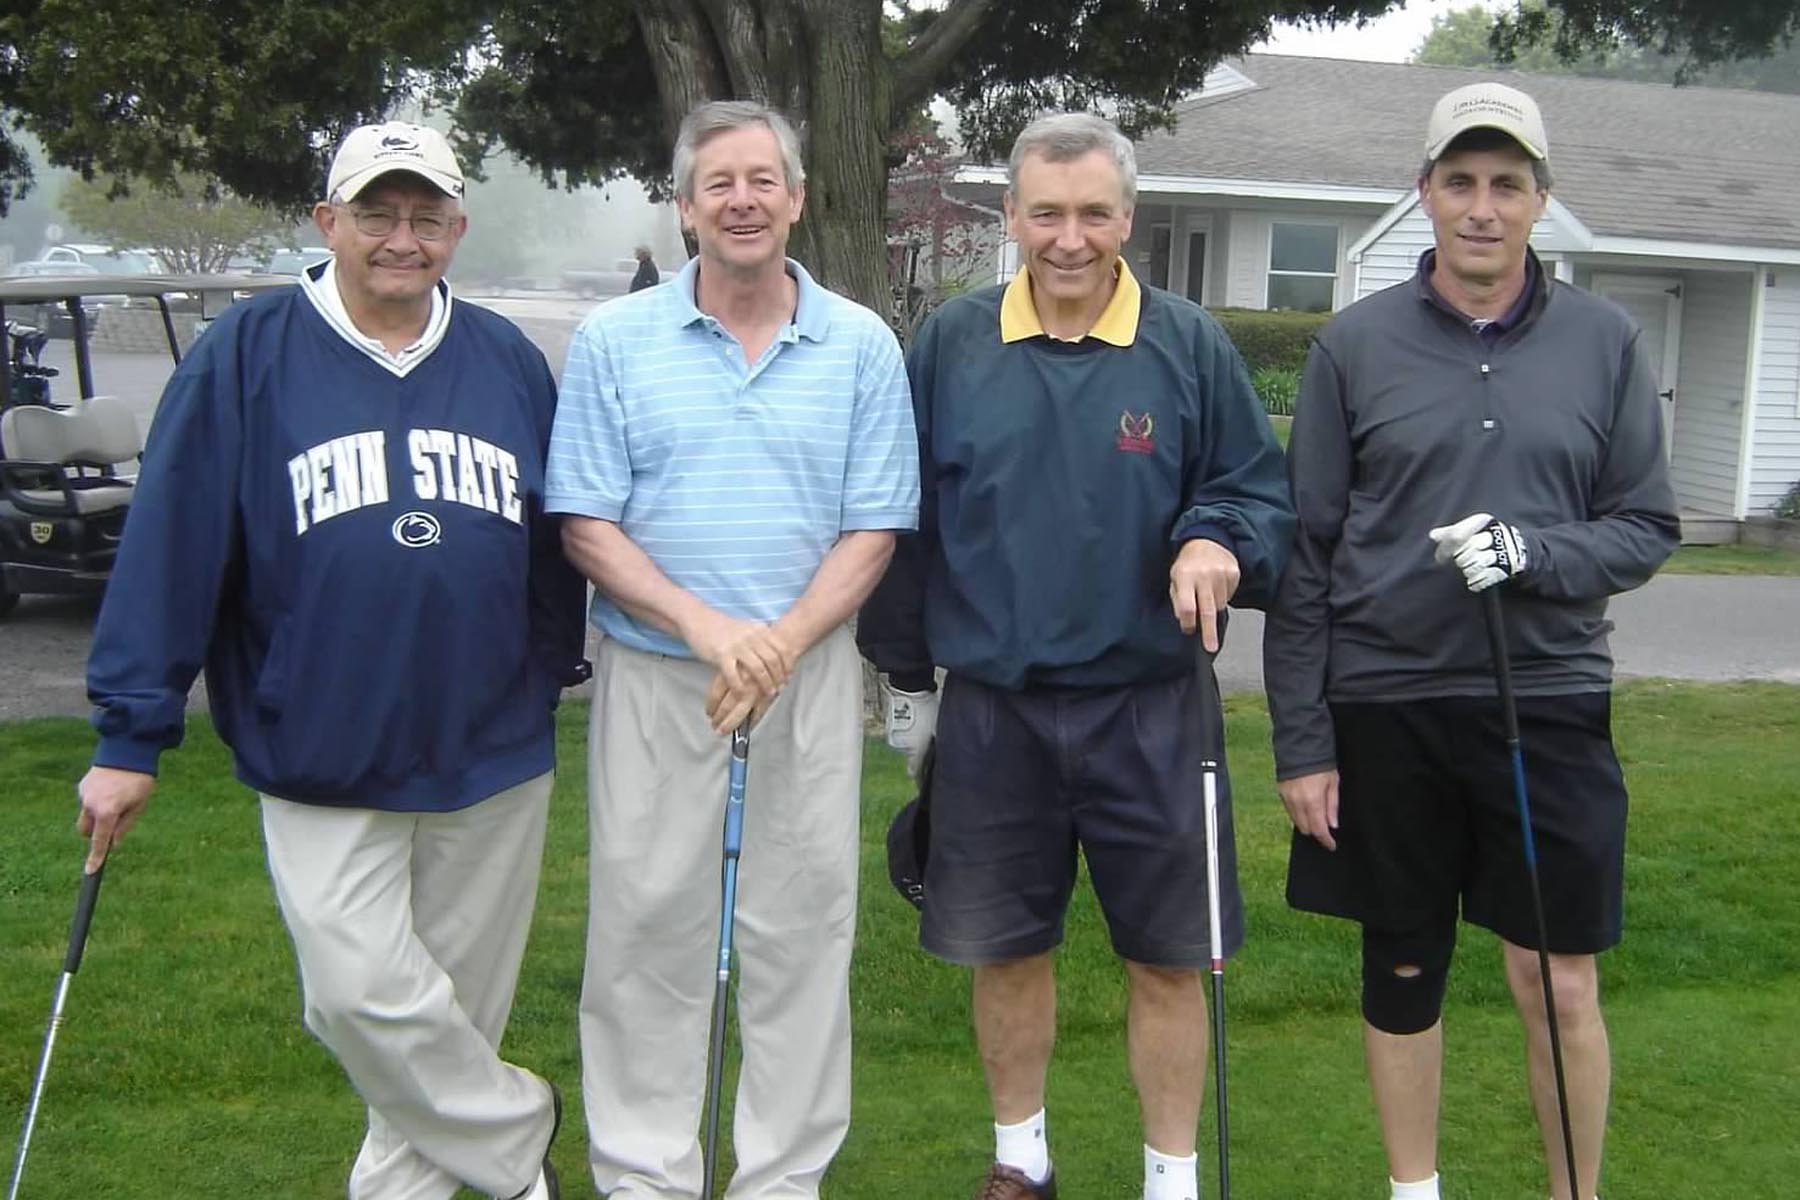  2012 Theta Chi Golf Open
L to R: Ed Kivitz, Matt Mankus, Tom Raymond, Mike D'Alesio 